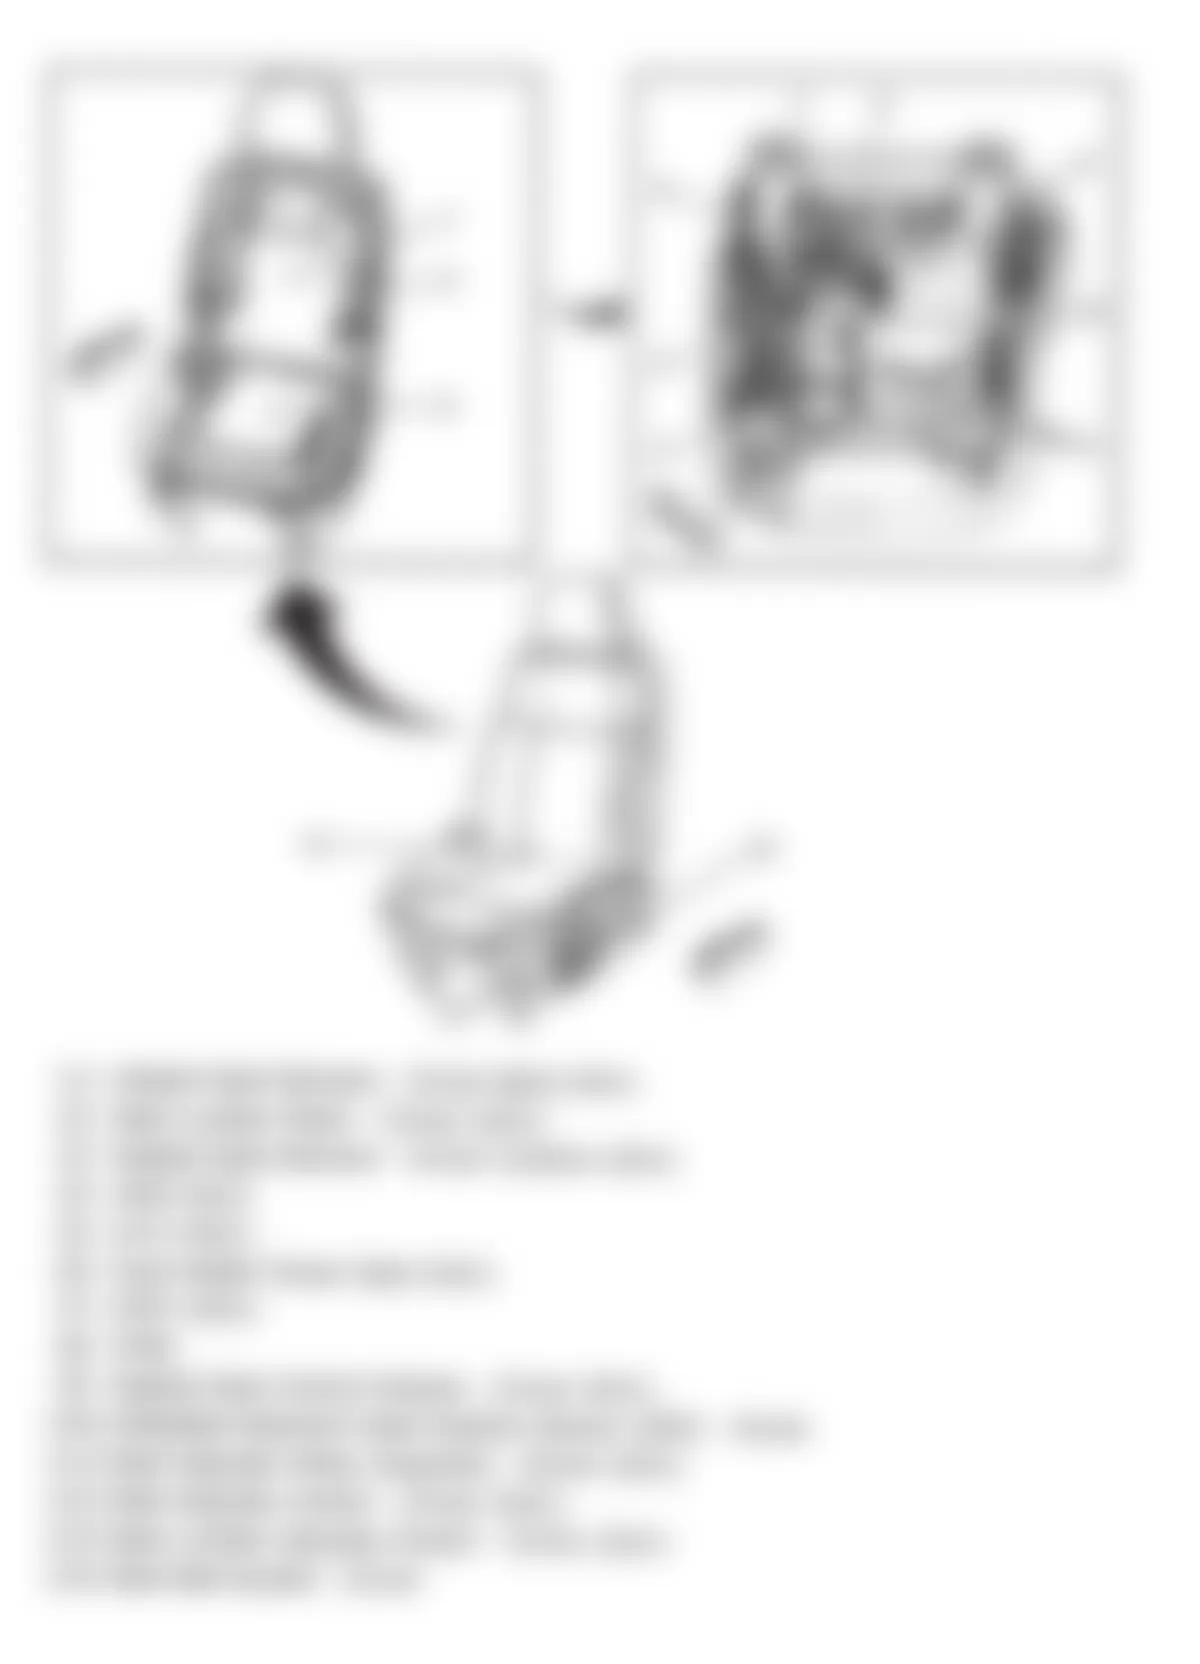 Hummer H3T Alpha 2009 - Component Locations -  Drivers Seat Components